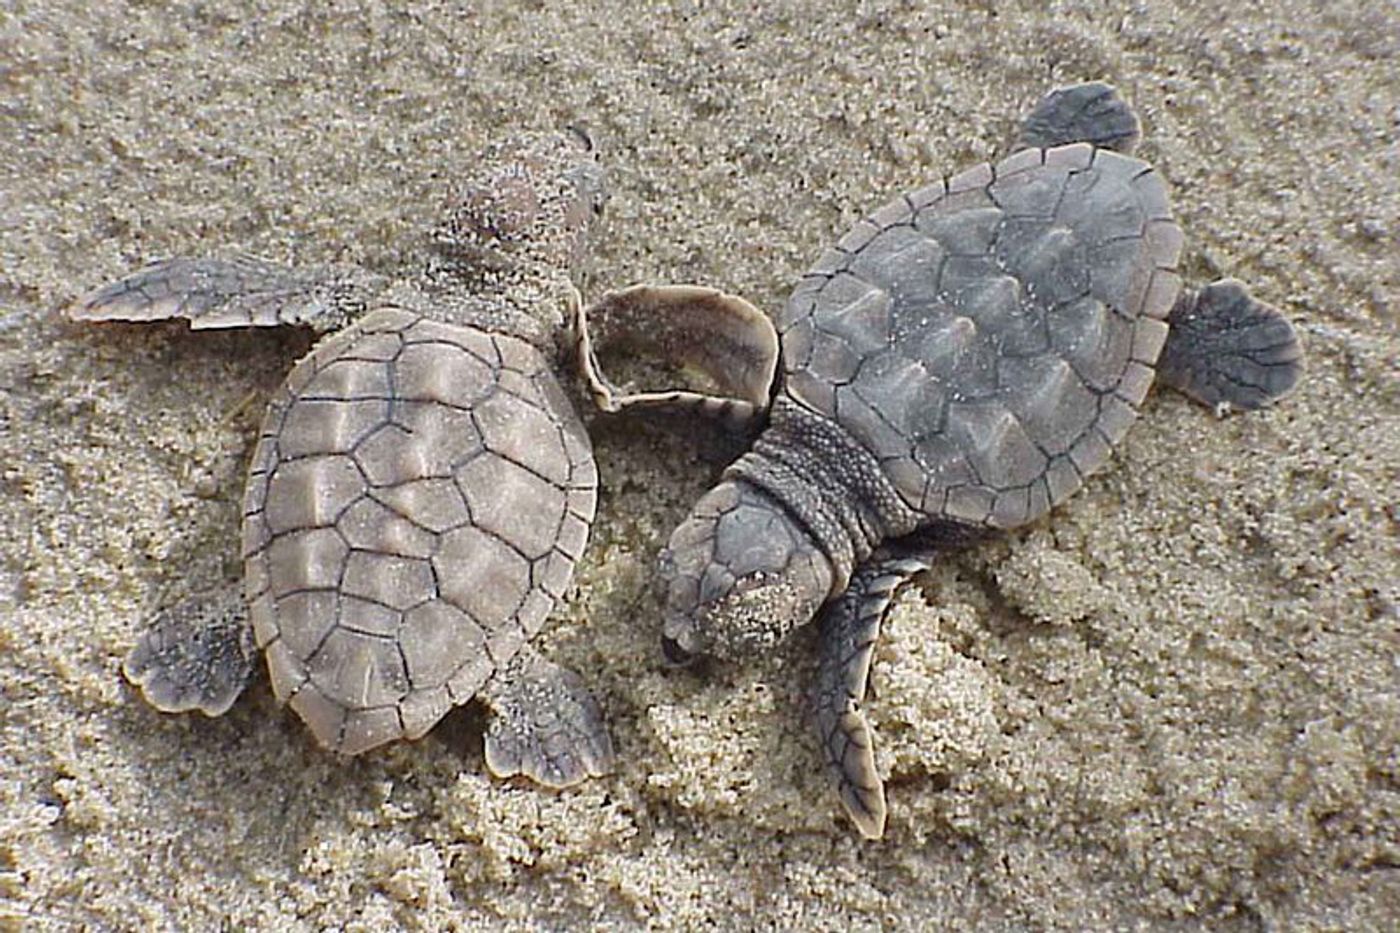 A couple of baby loggerhead sea turtles.